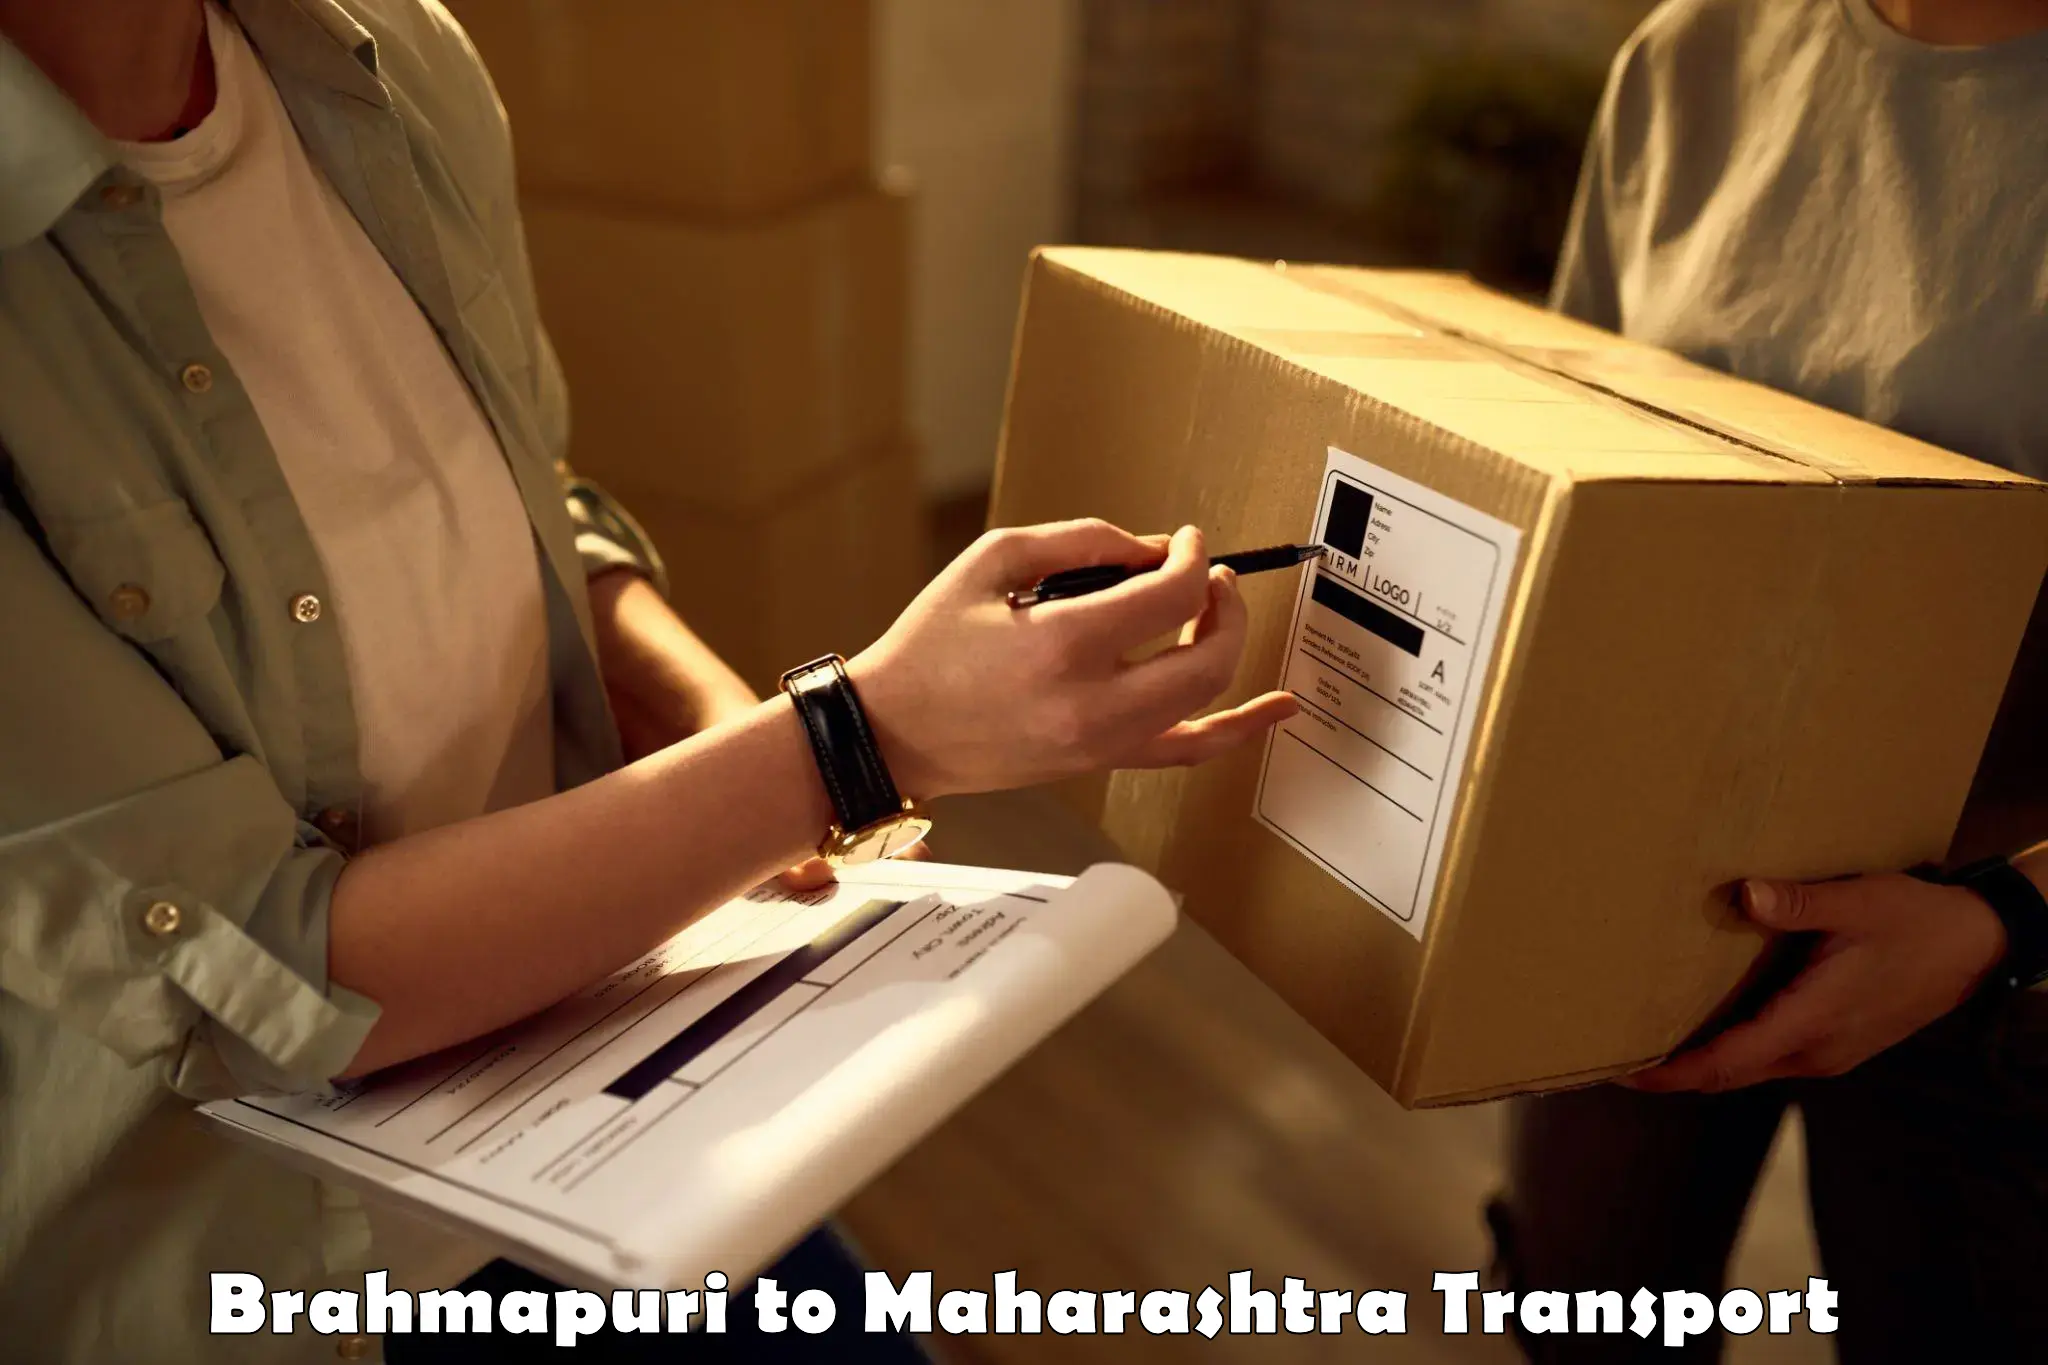 Online transport service Brahmapuri to Dusarbid